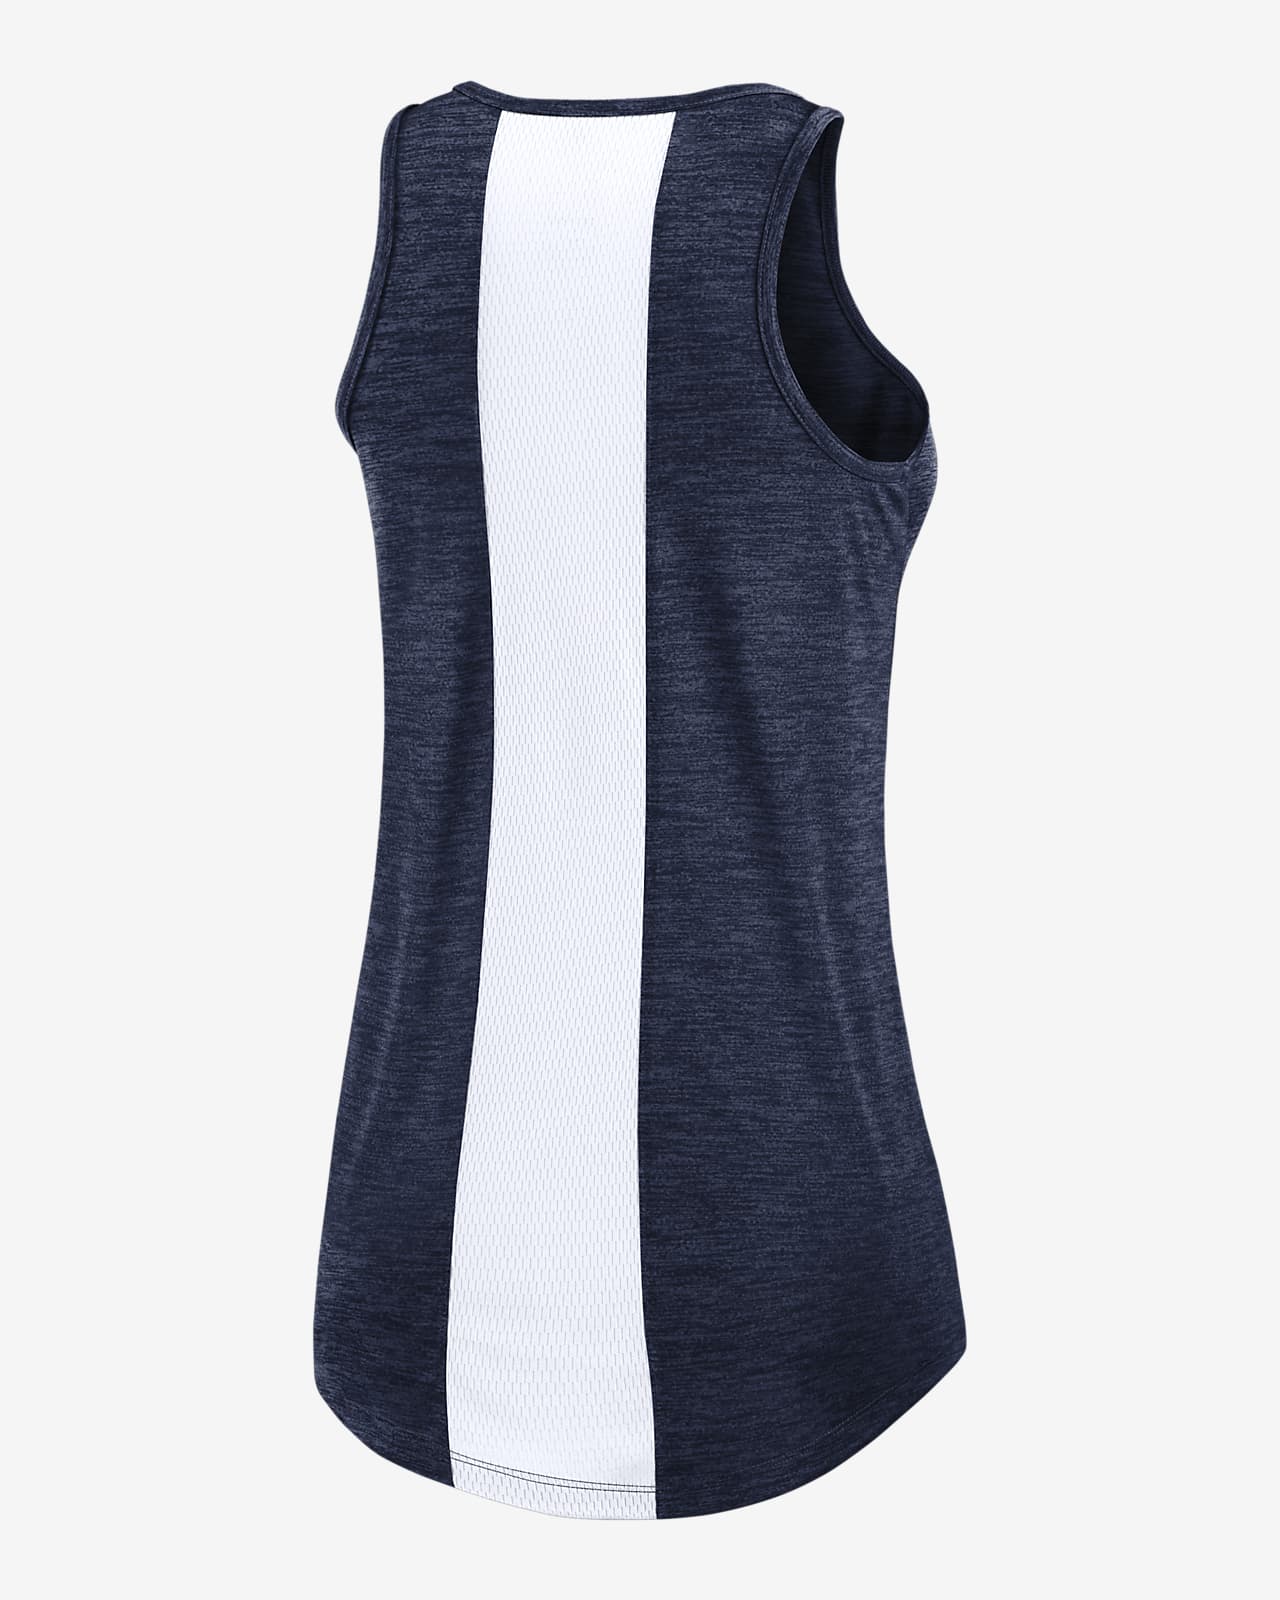 Camiseta de tirantes de cuello alto mujer Nike Dri-FIT Right Mix (MLB New York Yankees).